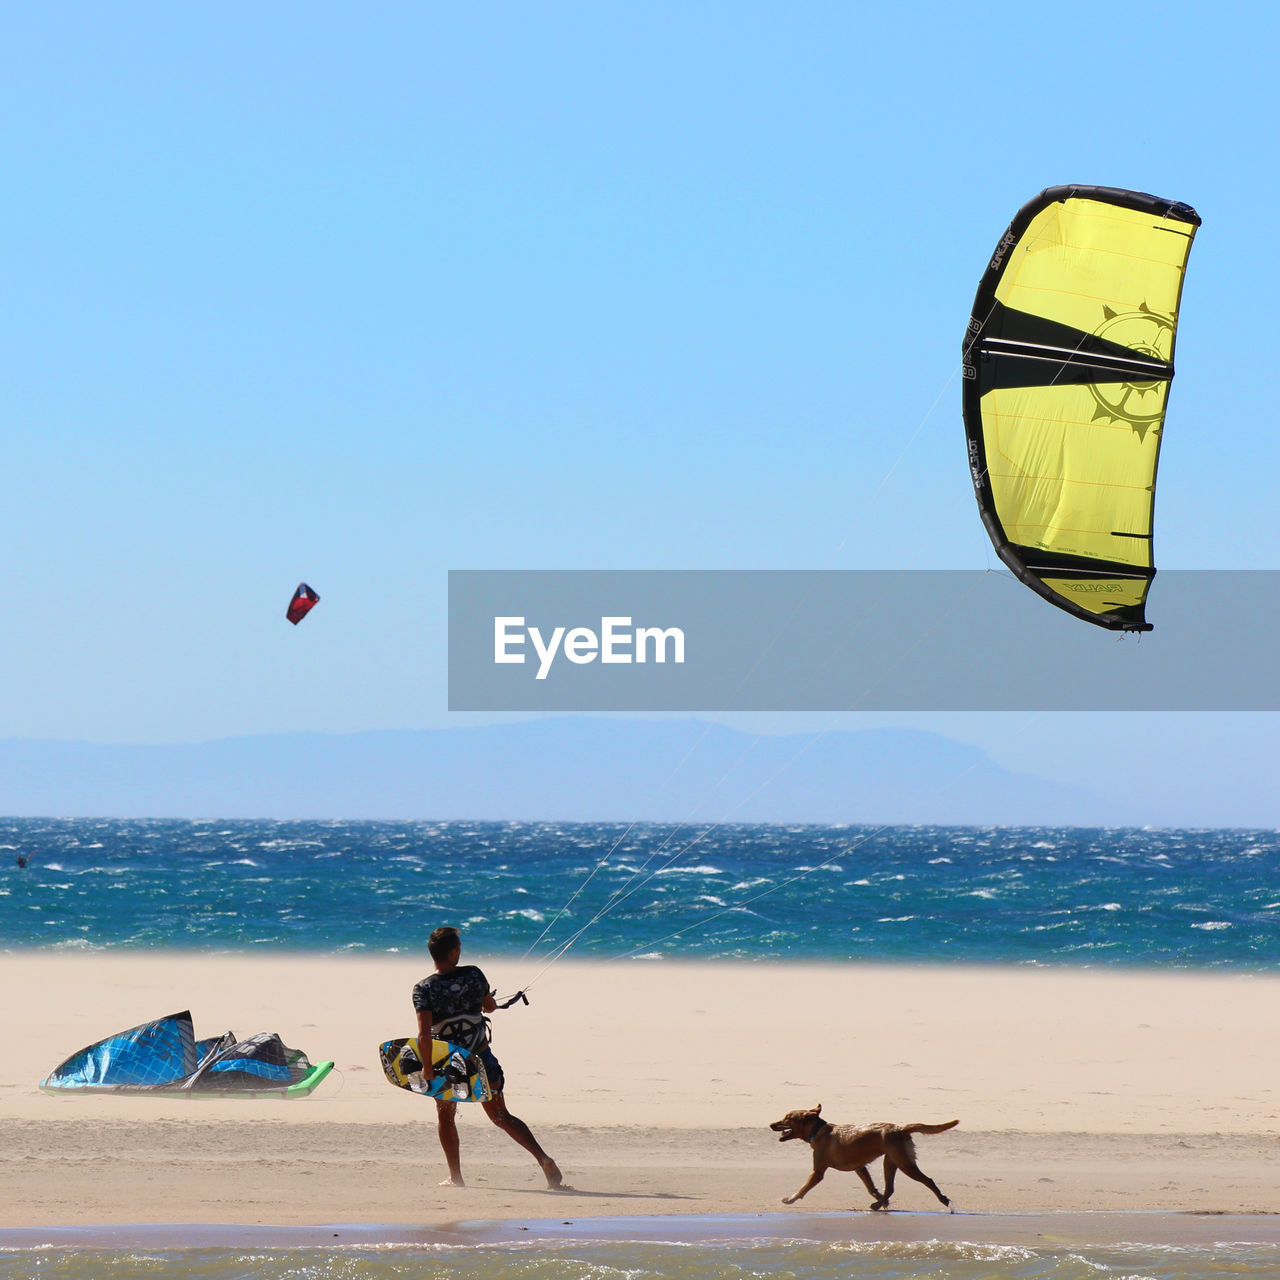 Man flying kite at beach against clear blue sky